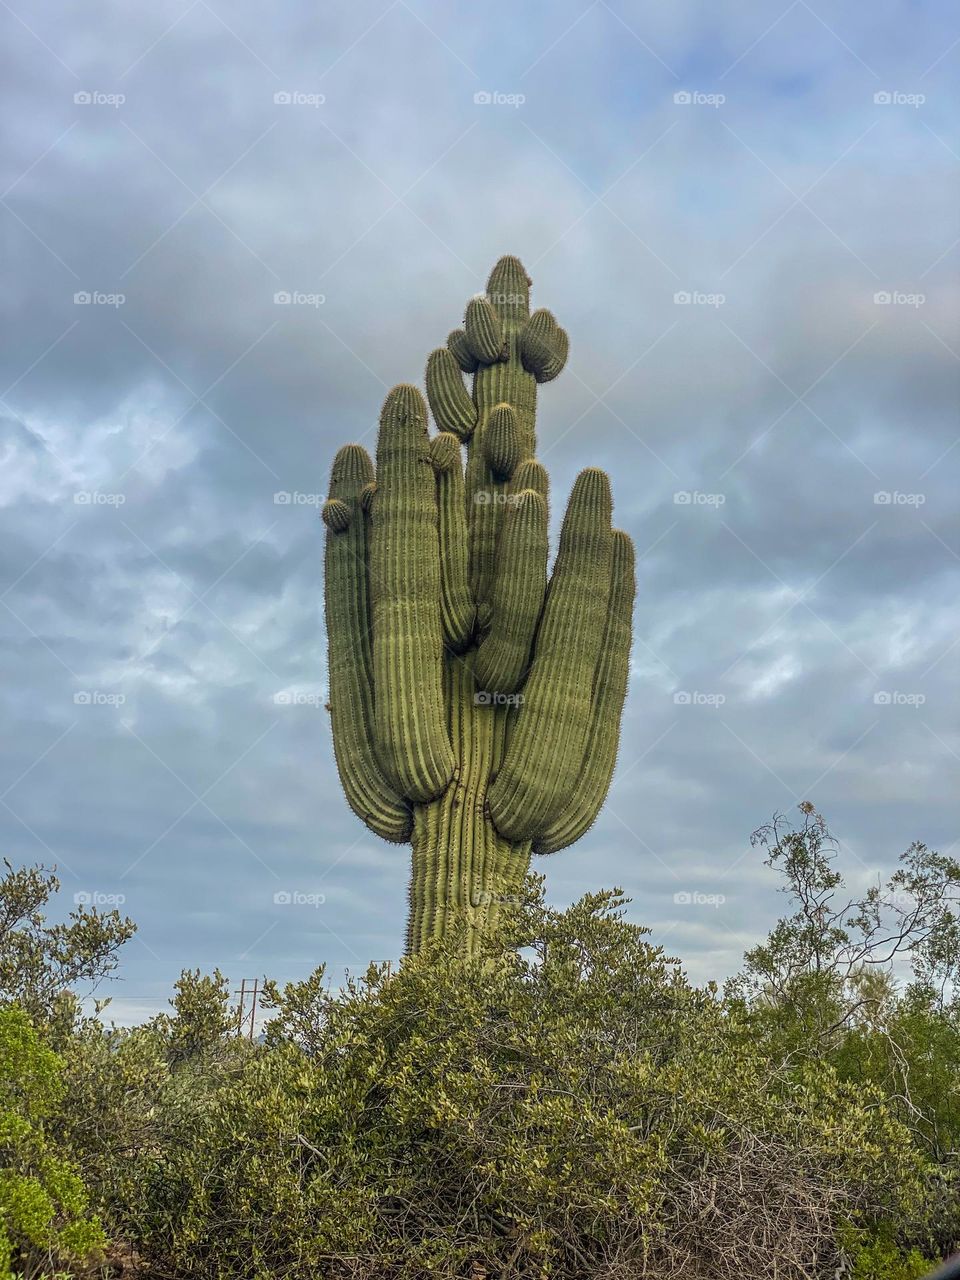 Low angle view of a saguaro cactus